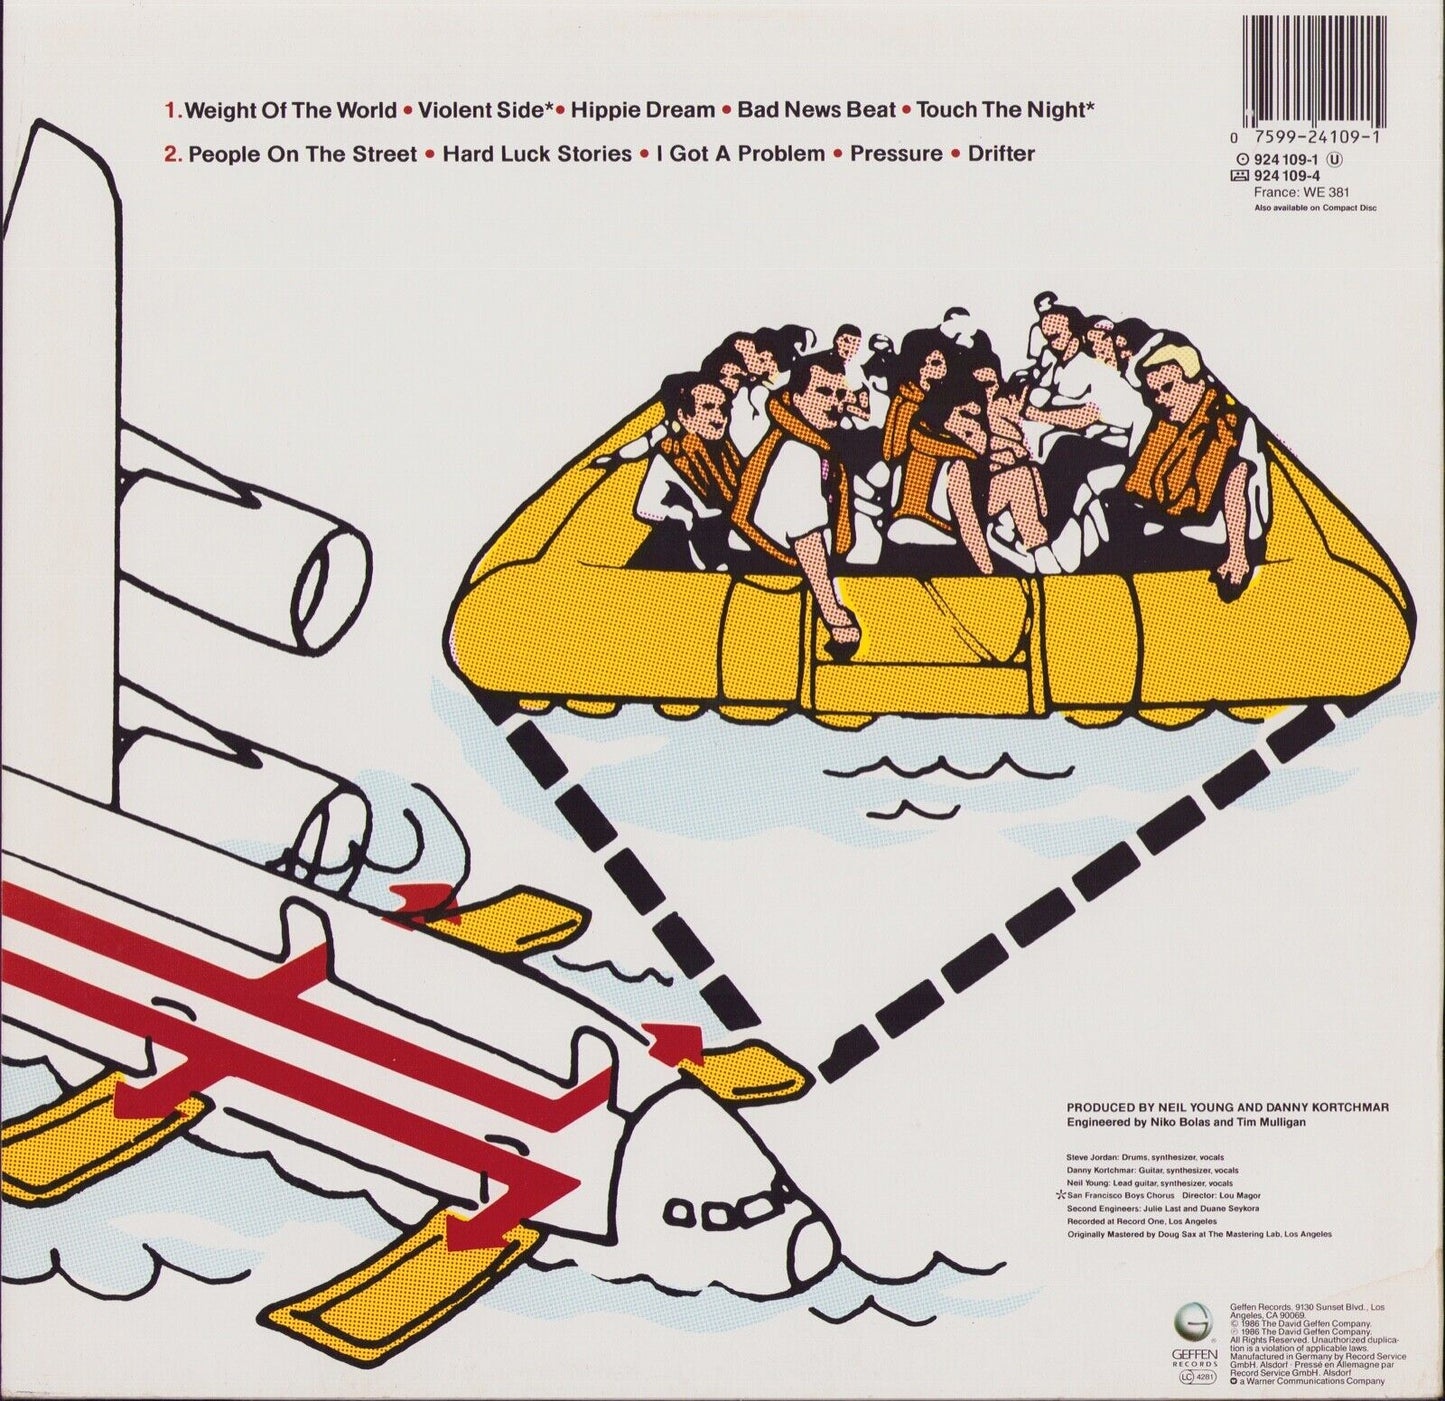 Neil Young - Landing On Water Vinyl LP